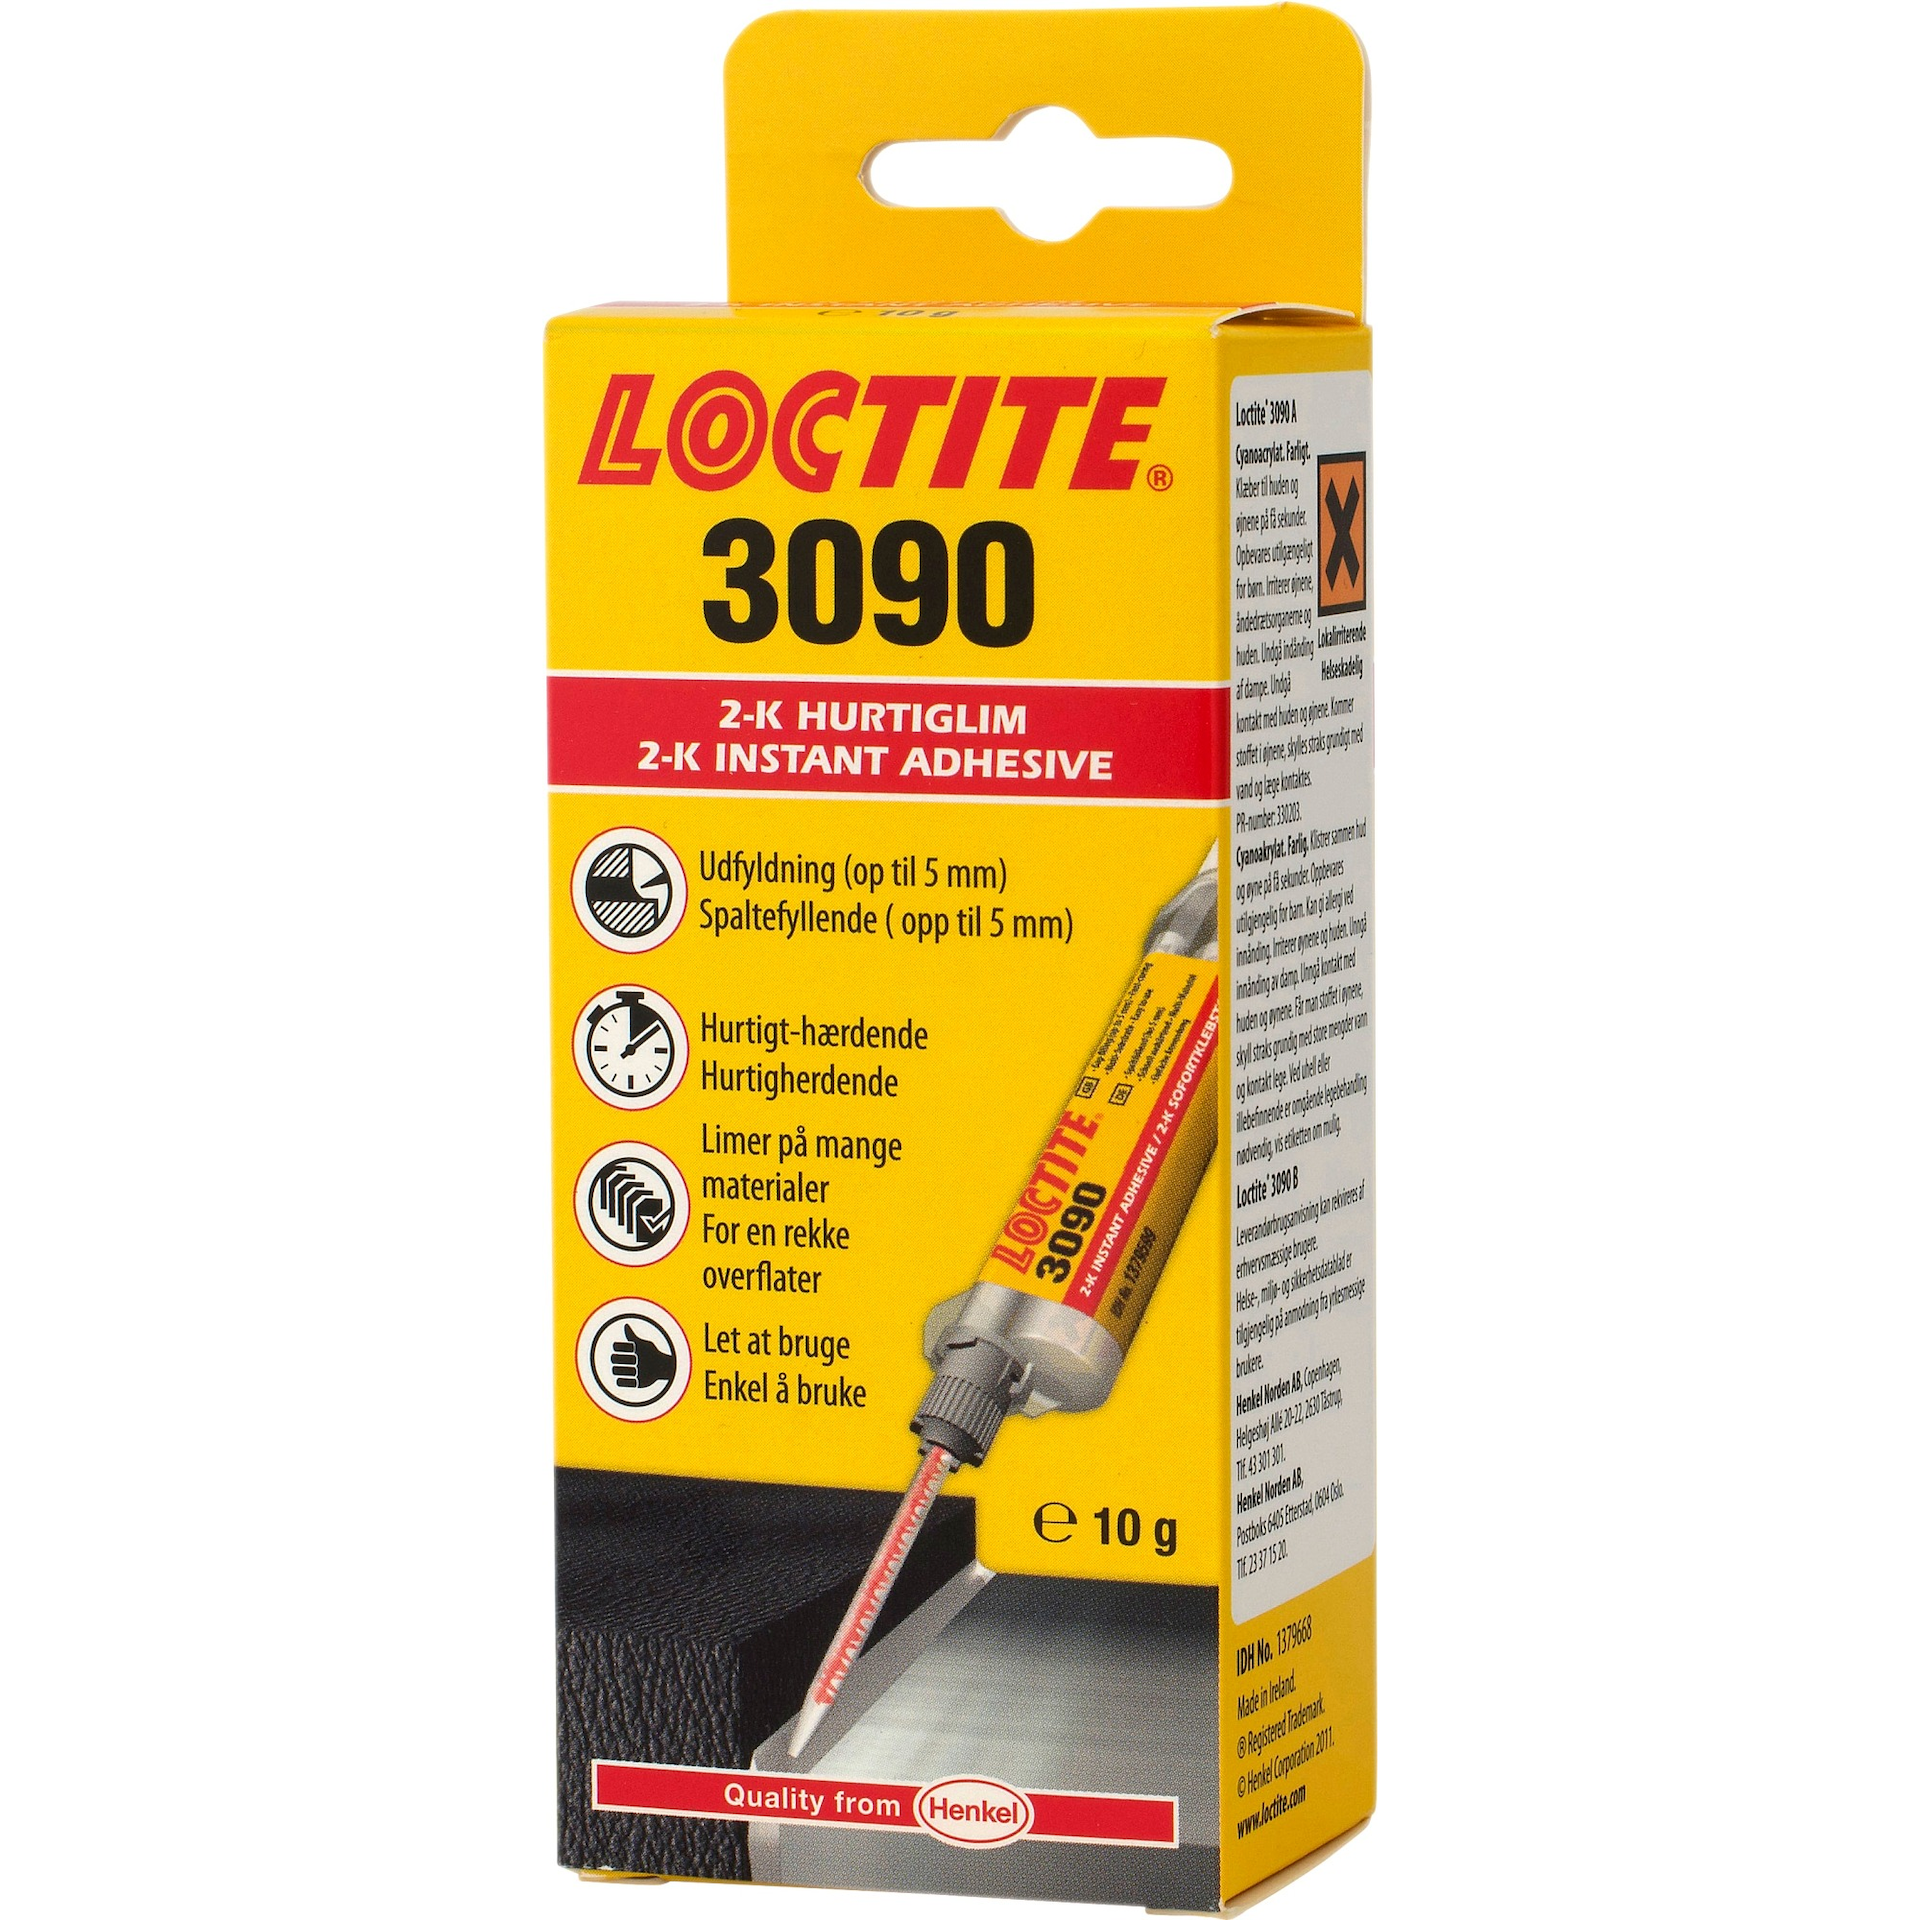 Loctite 3090 10g DE/EN, LoctiteLoctite 3090 2K Cyanoacrylate 10 g